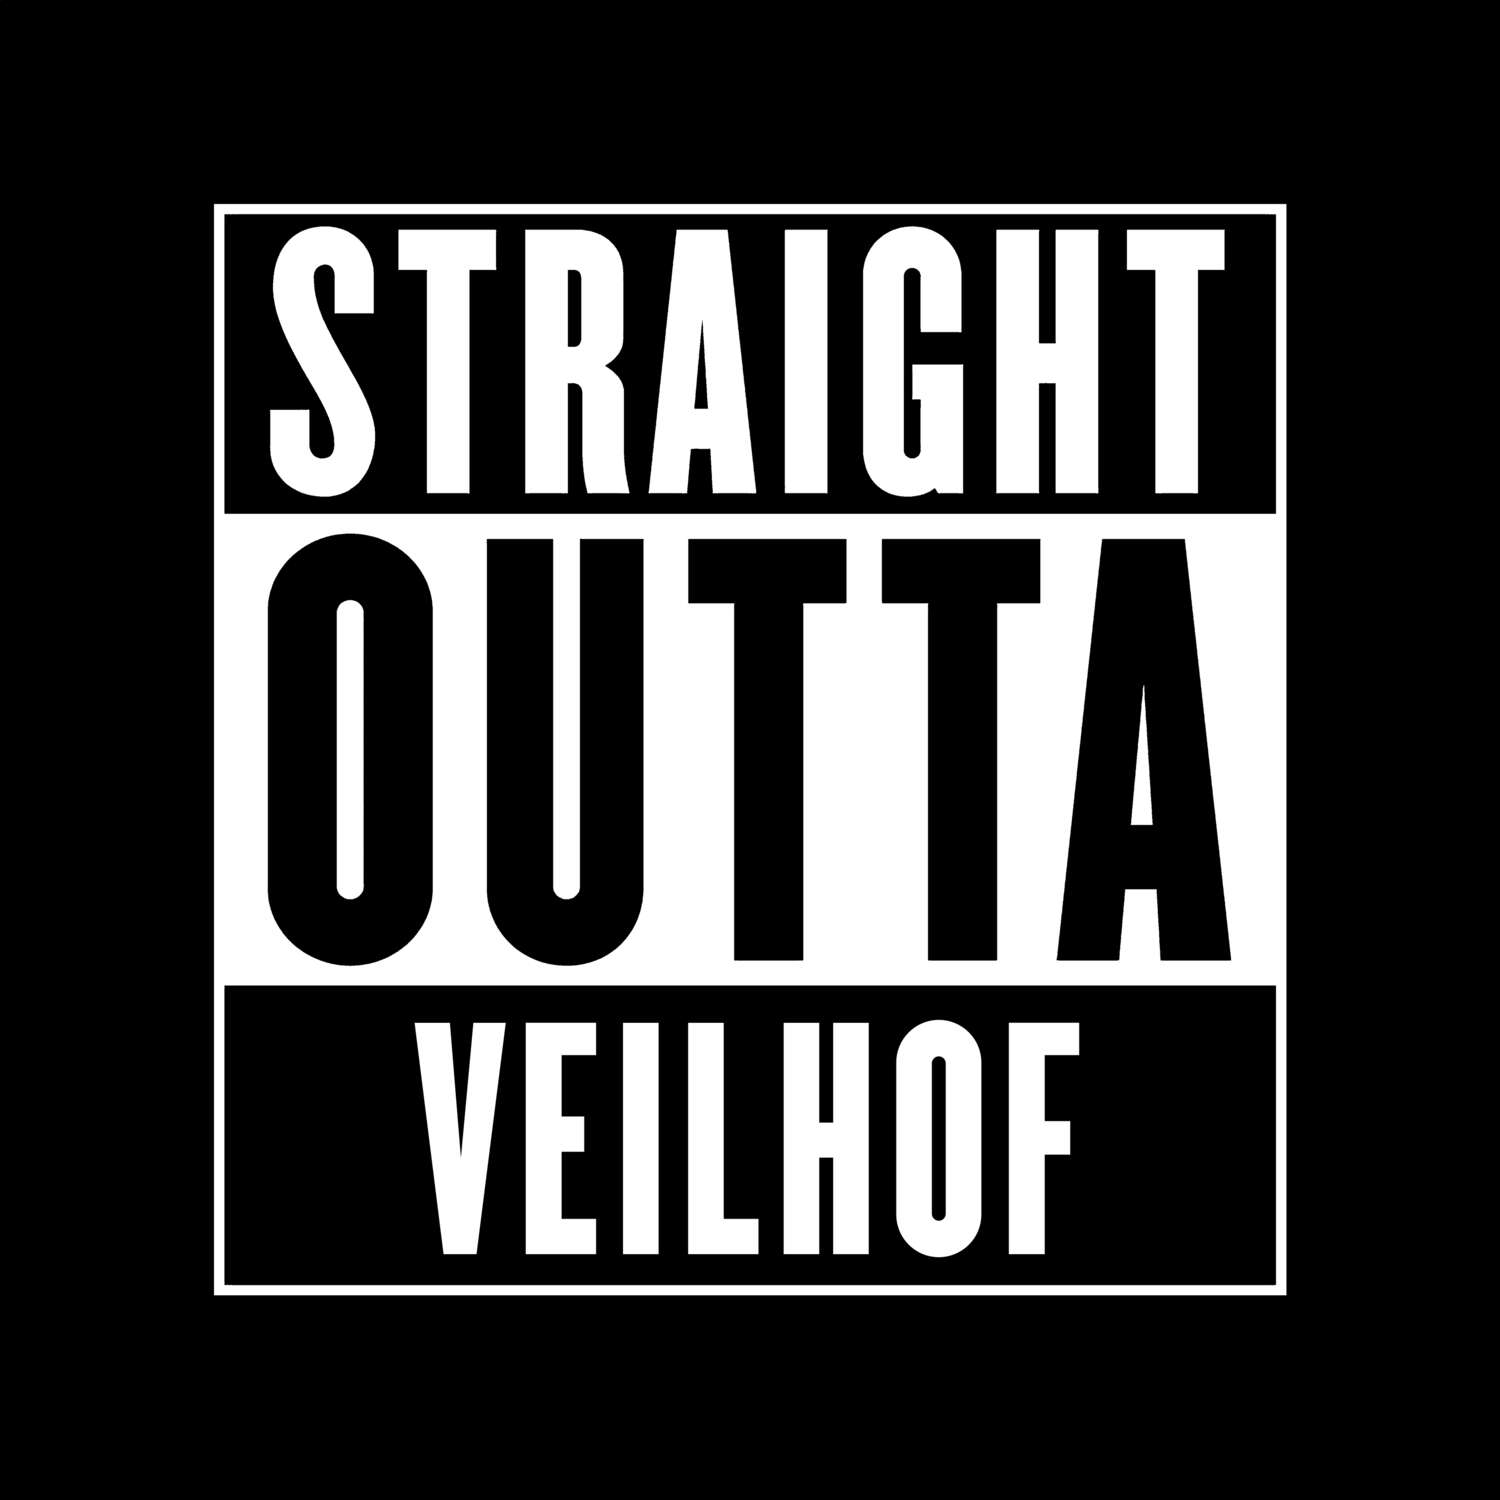 Veilhof T-Shirt »Straight Outta«